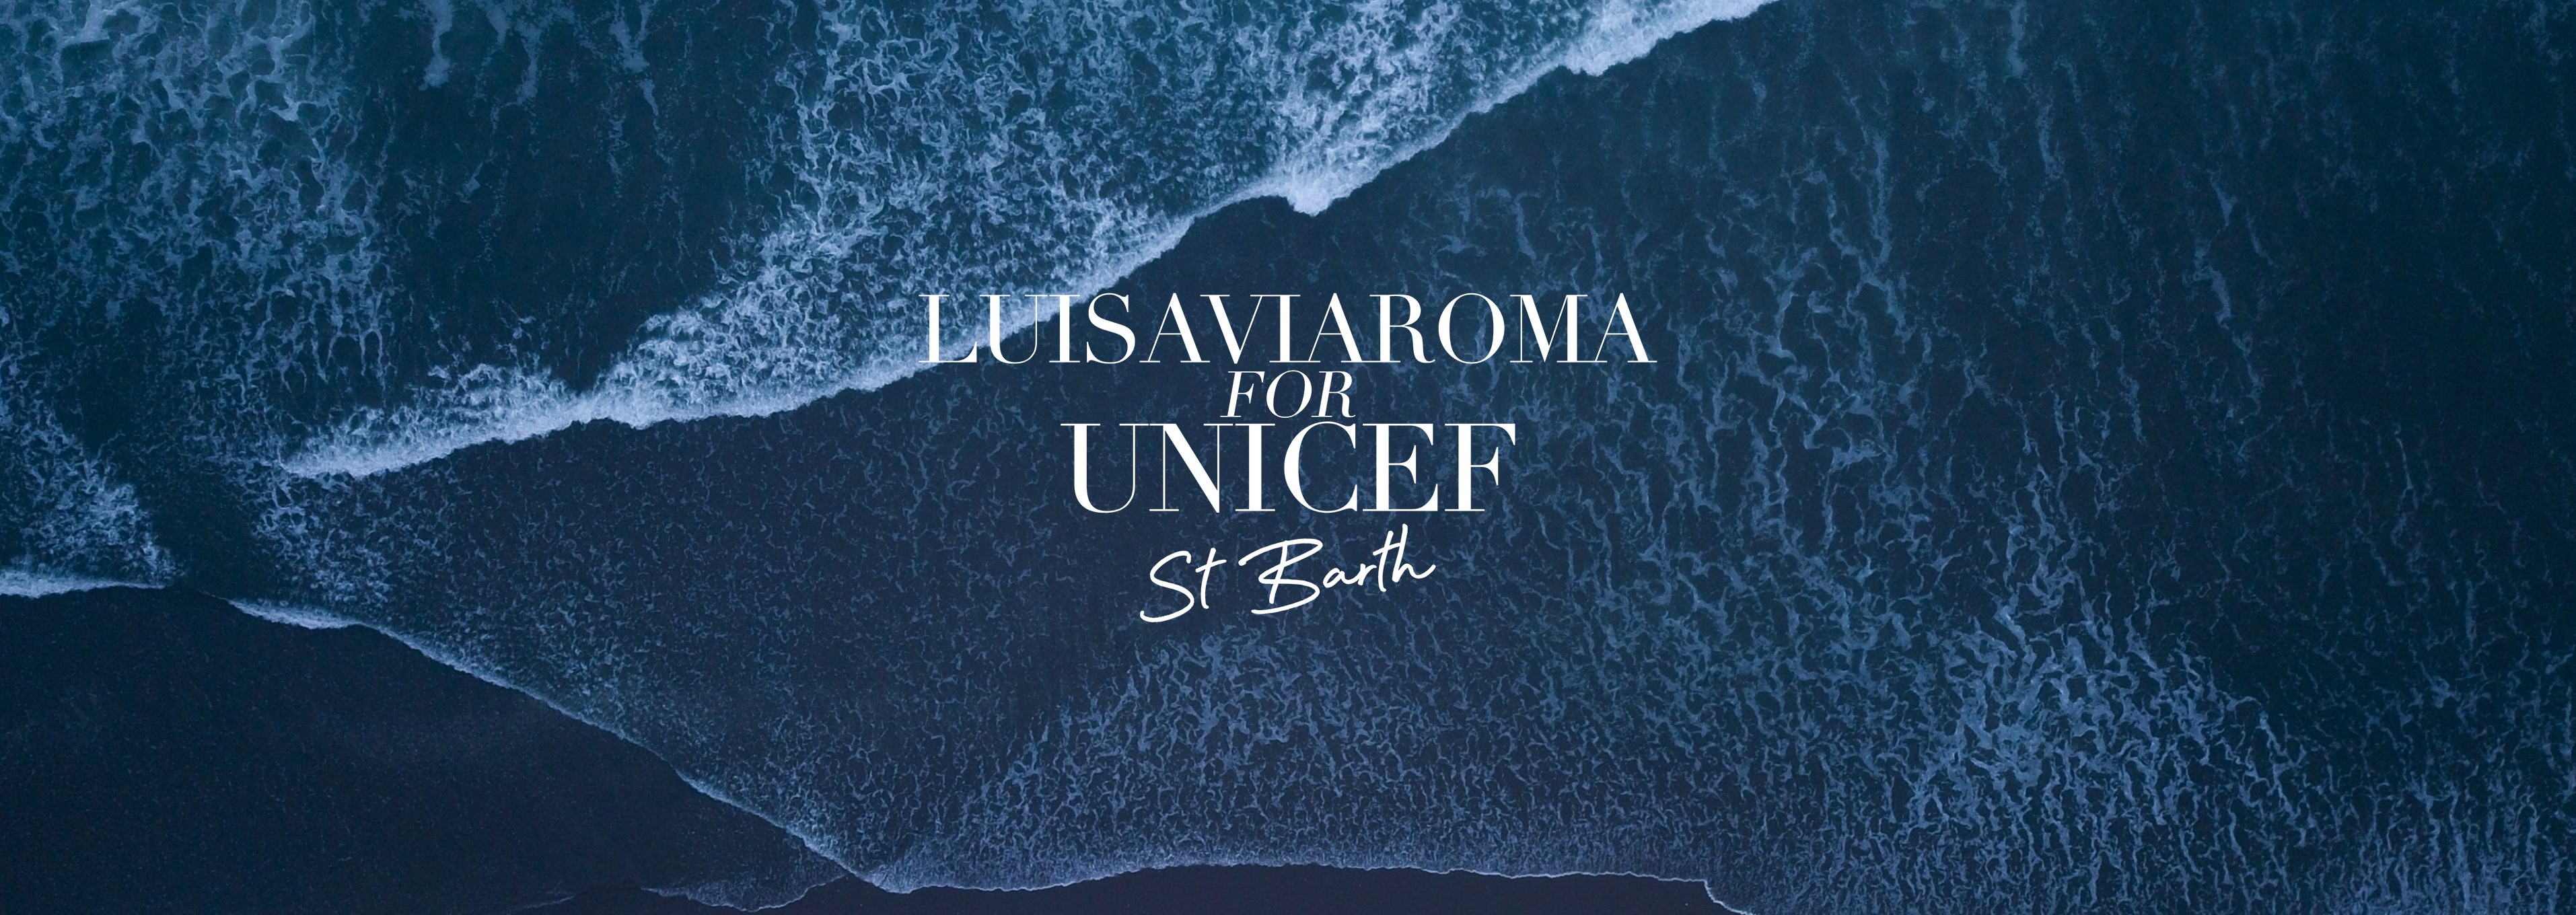 LuisaViaRoma for Unicef 2021 in セントバーツ